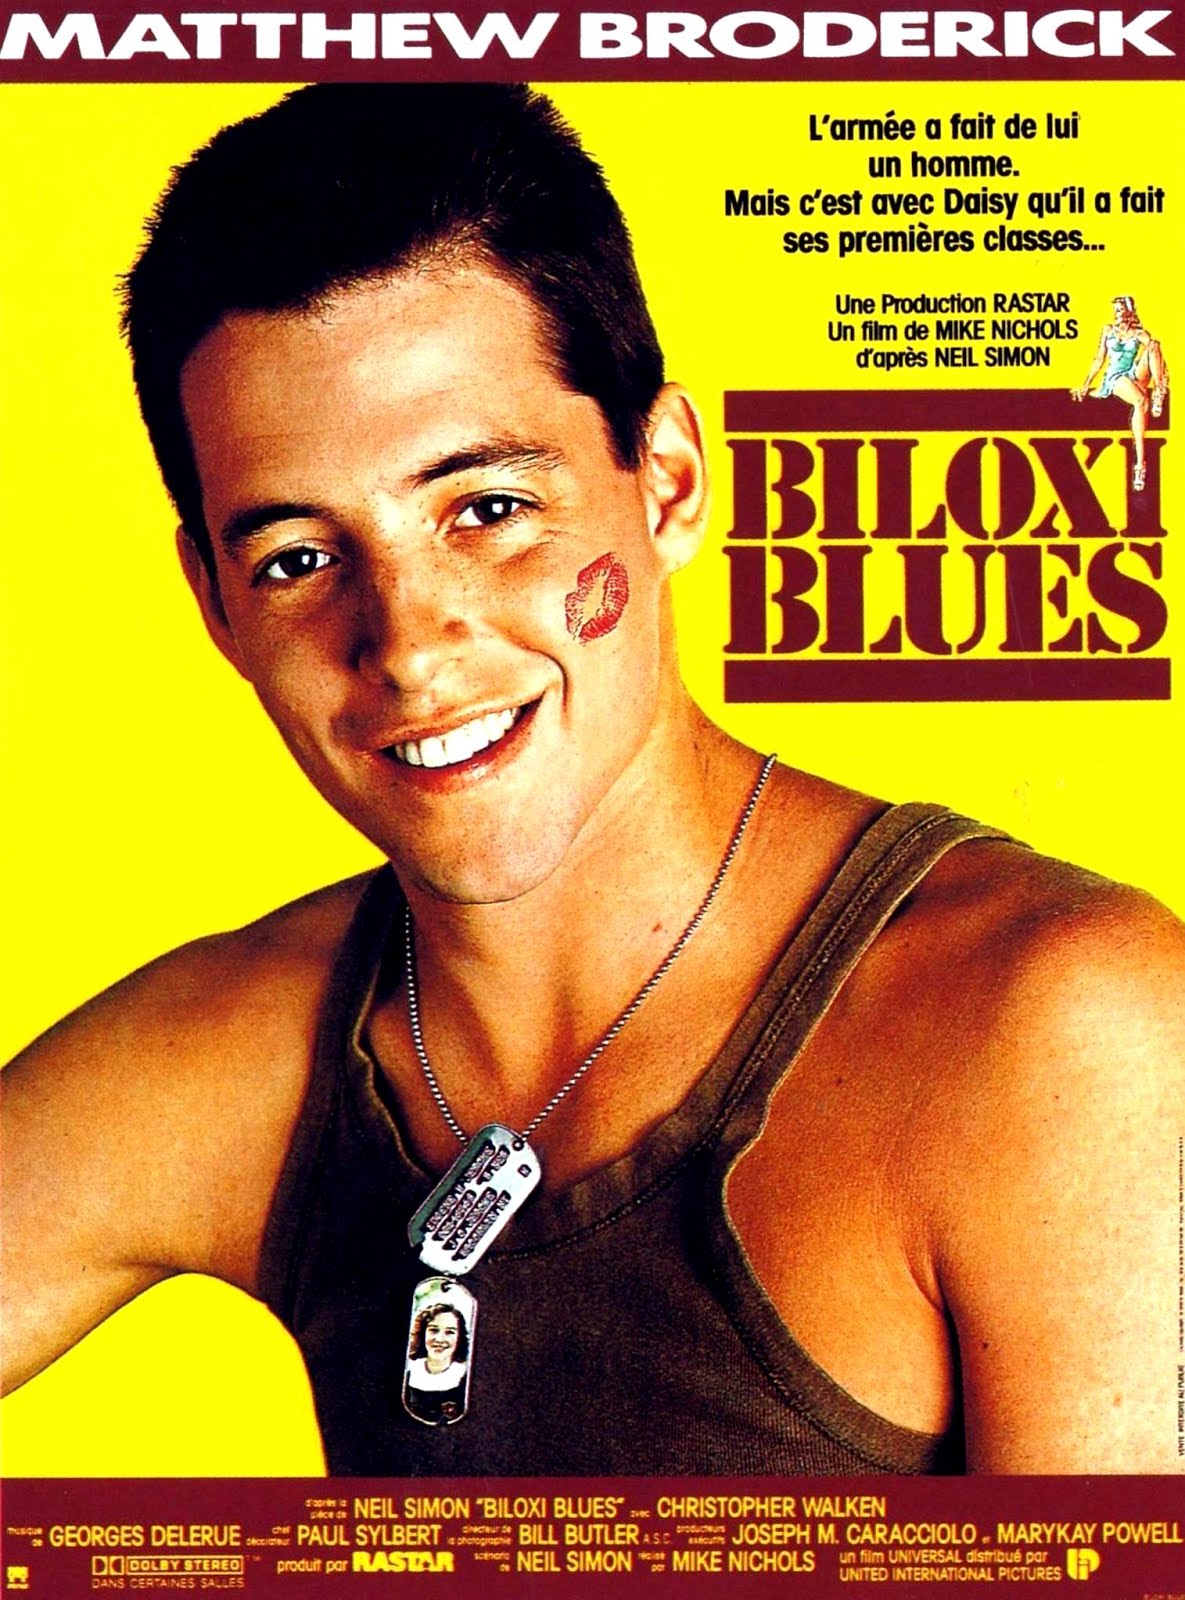 Biloxi blues (1987) Mike Nichols - Biloxi blues